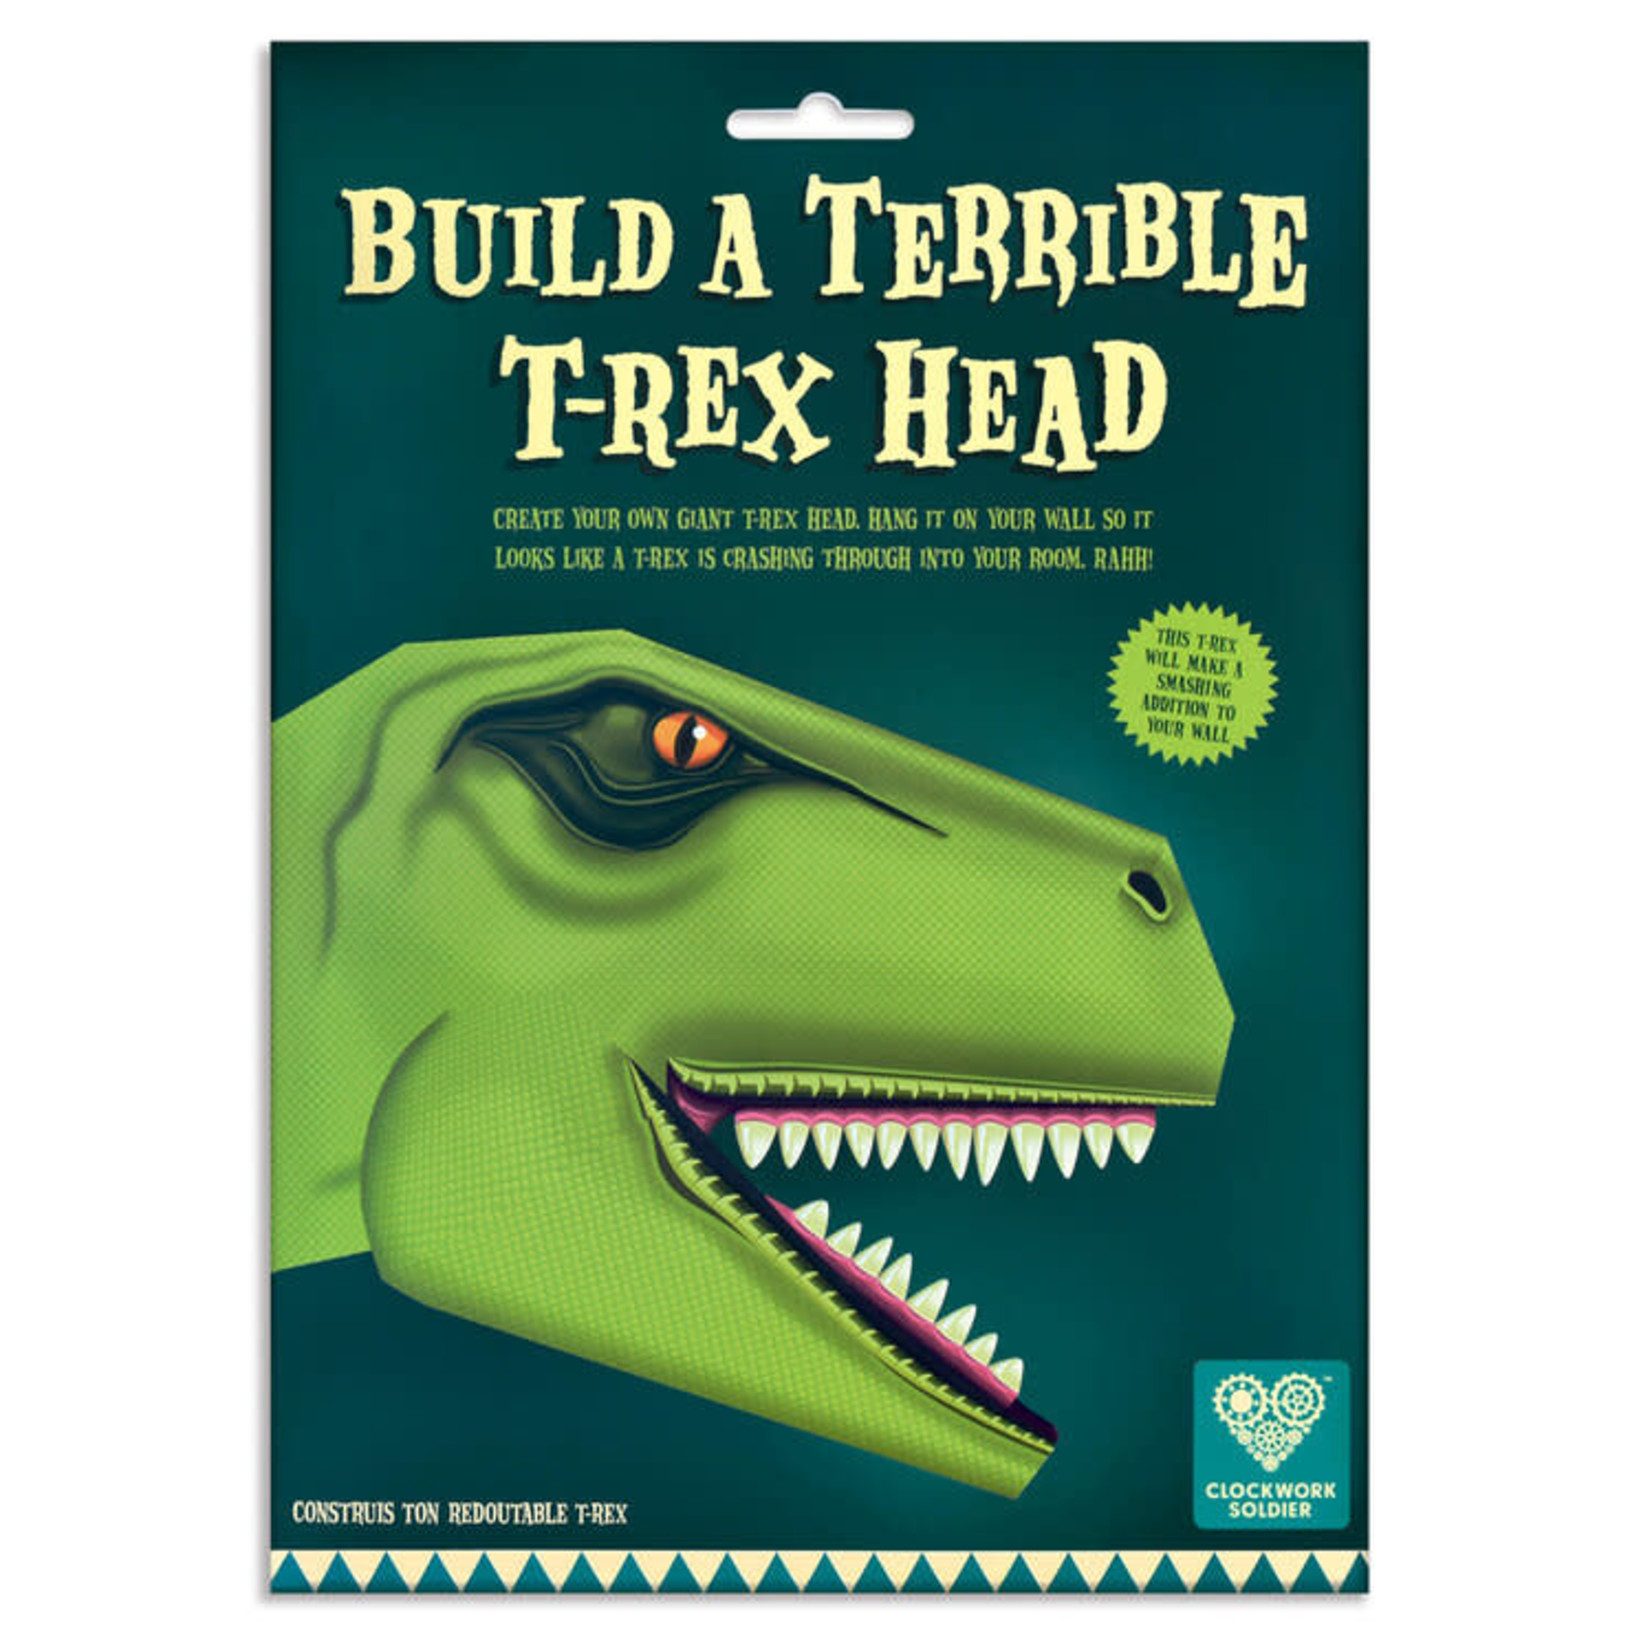 Build a T-Rex Head